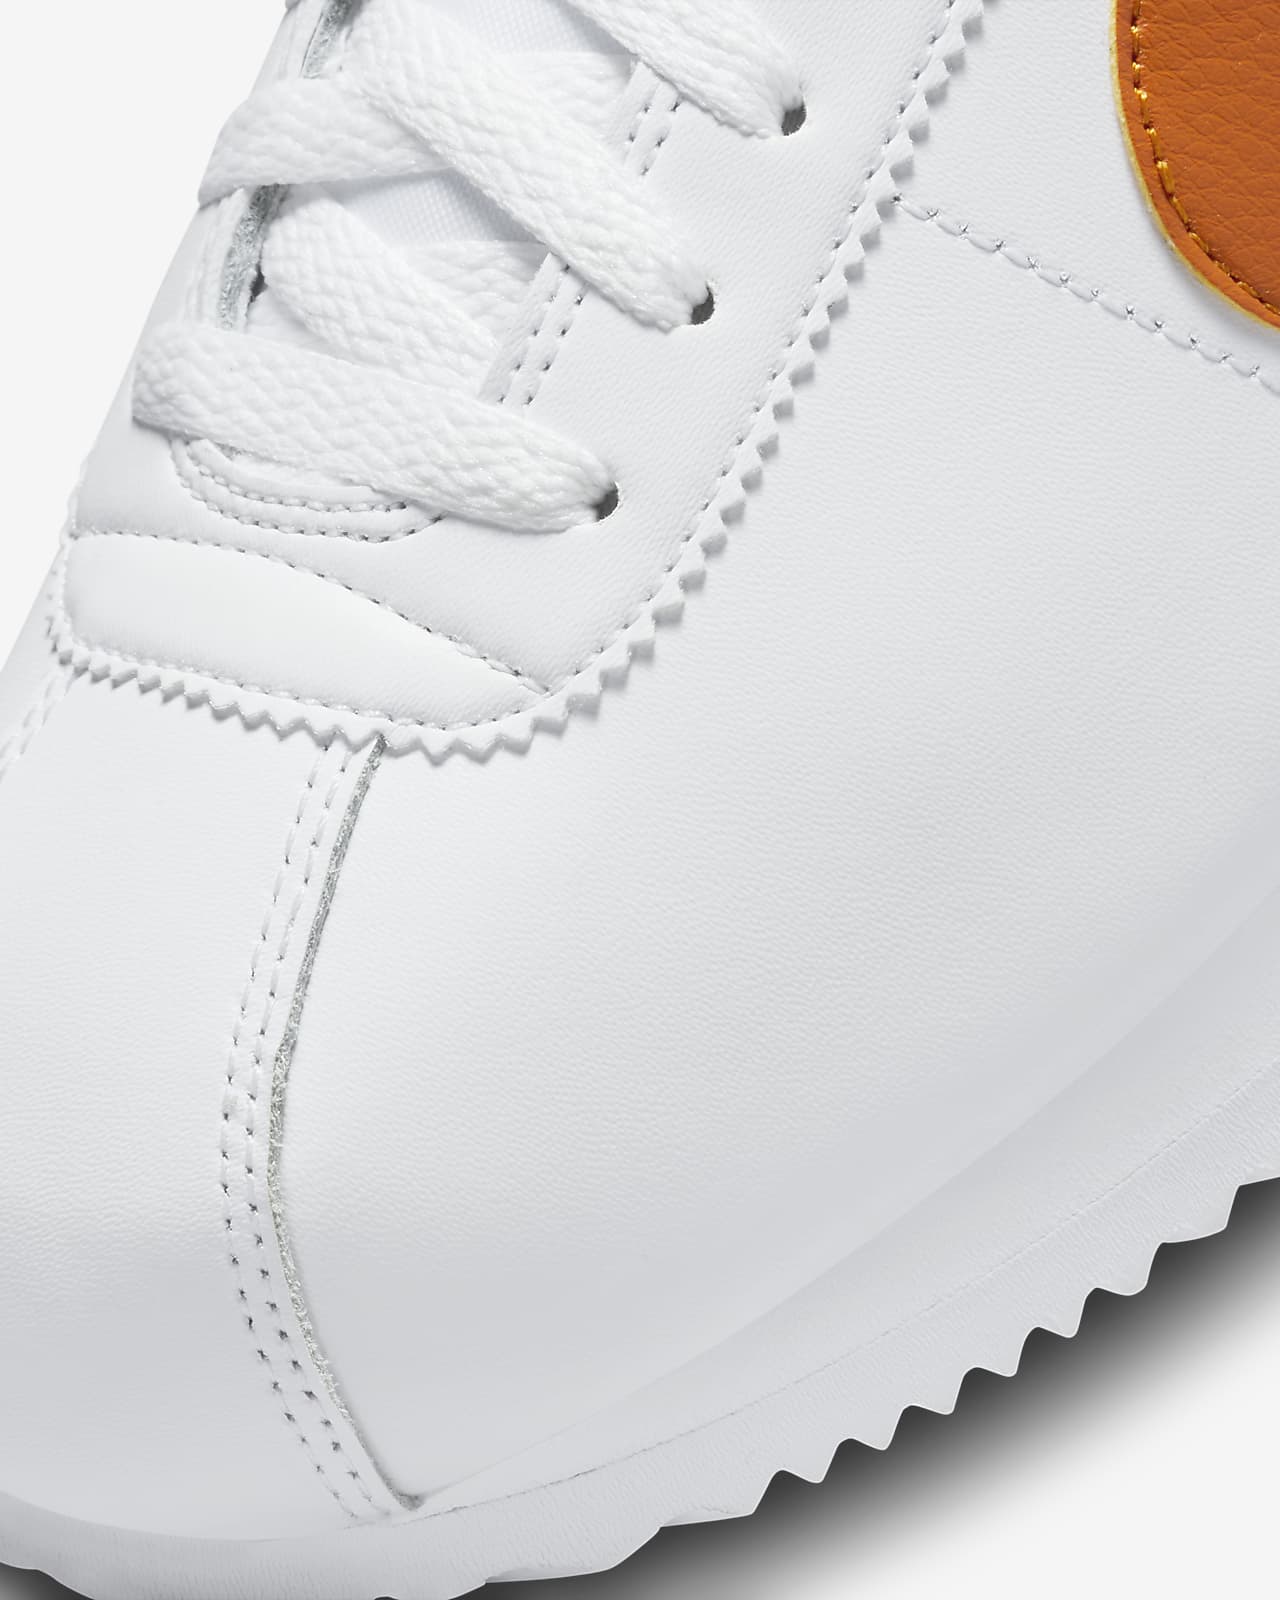 NIKE Men's Cortez Basic Leather Casual Shoe